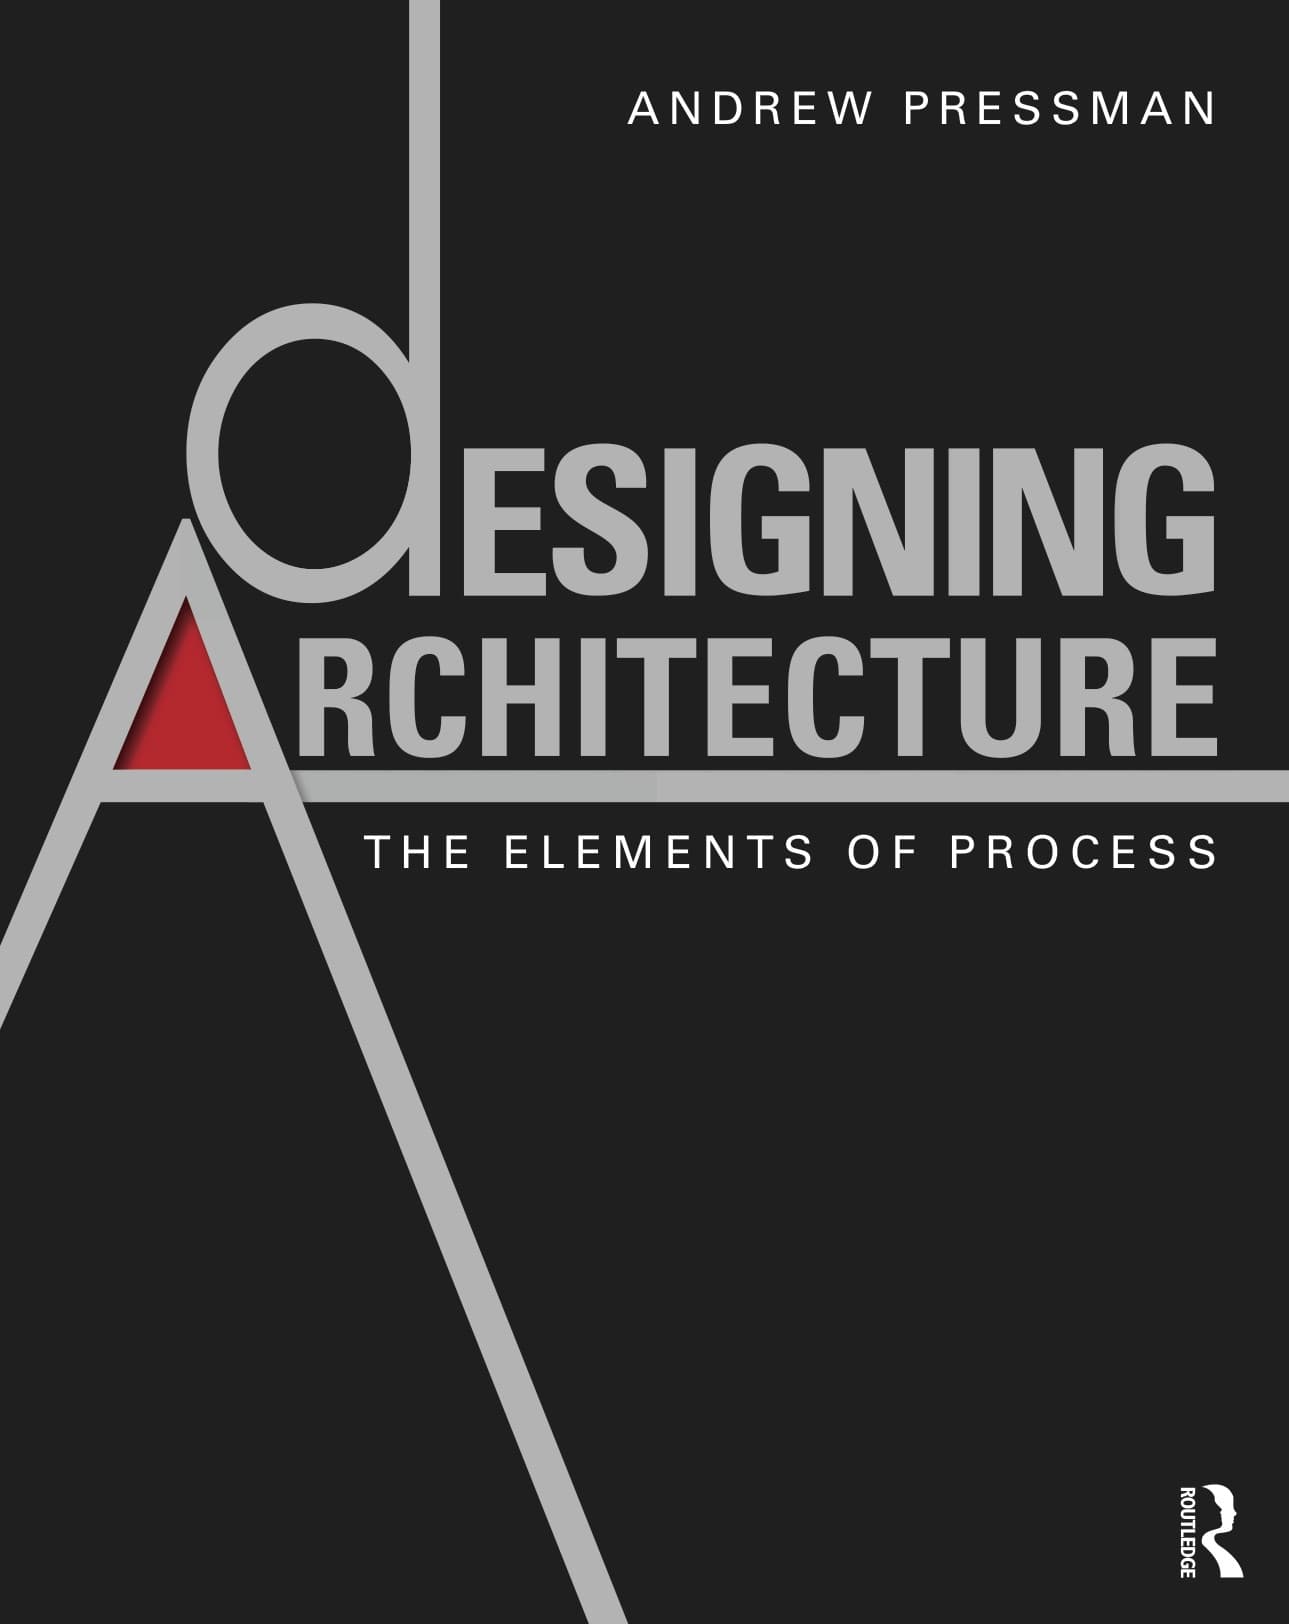 Book on Architectural Design